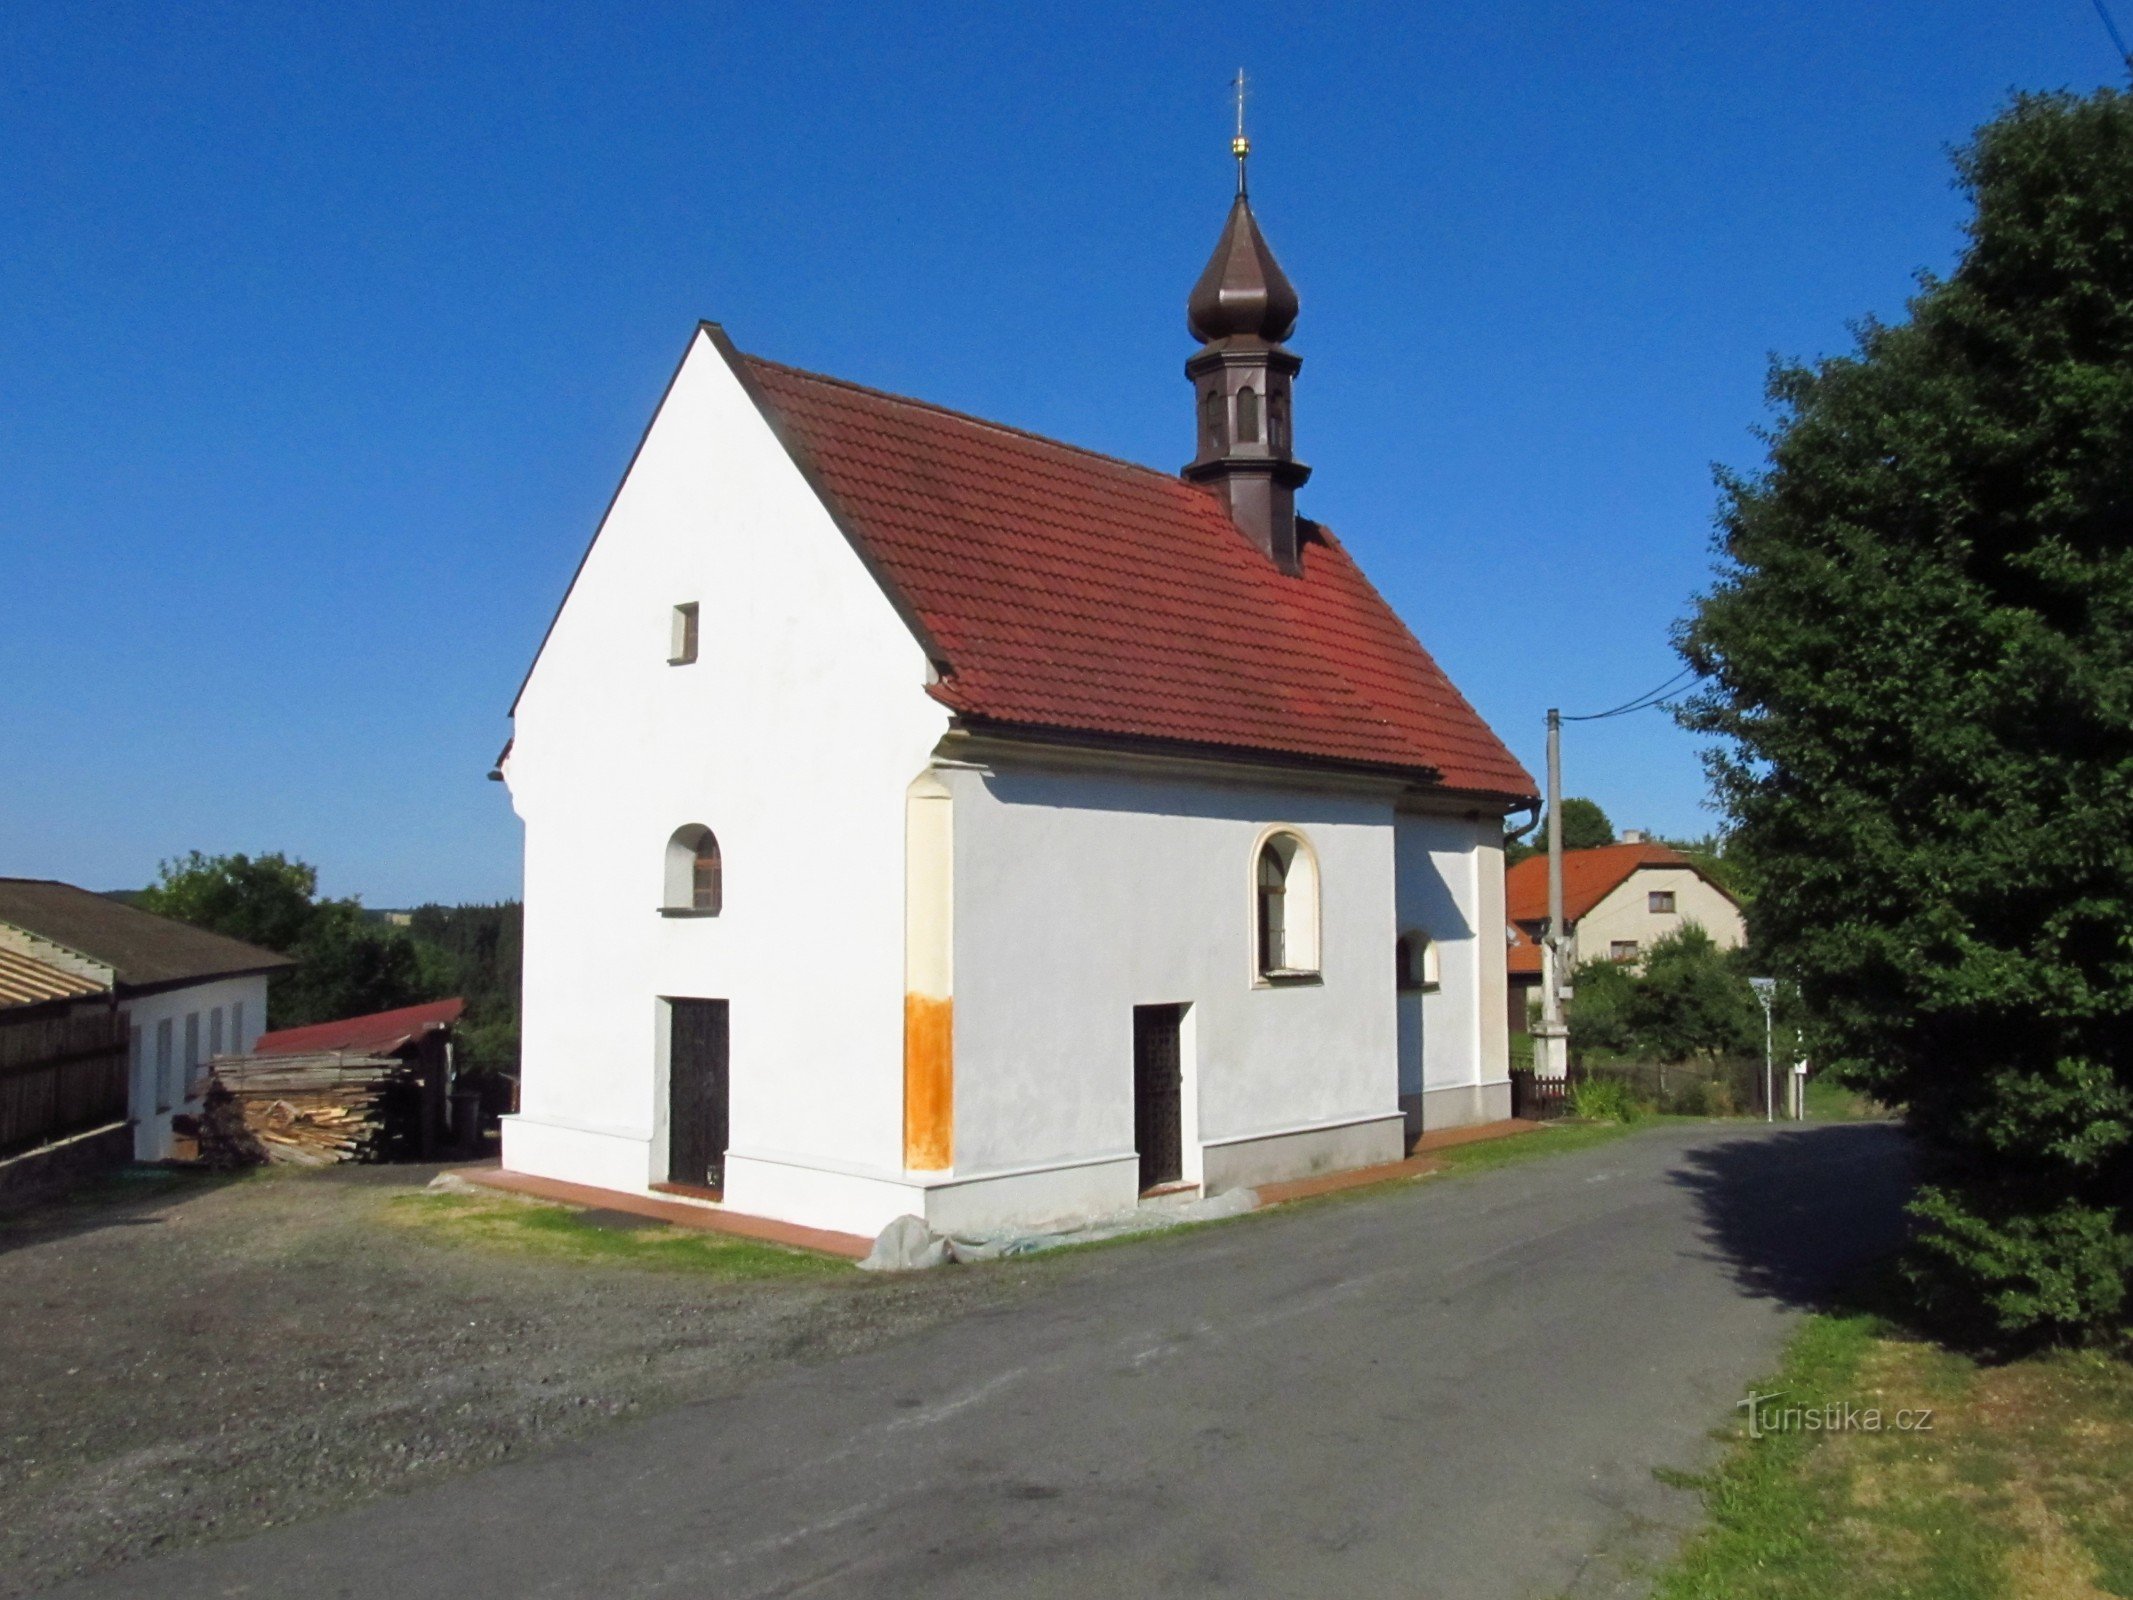 02 Church in Pivonice